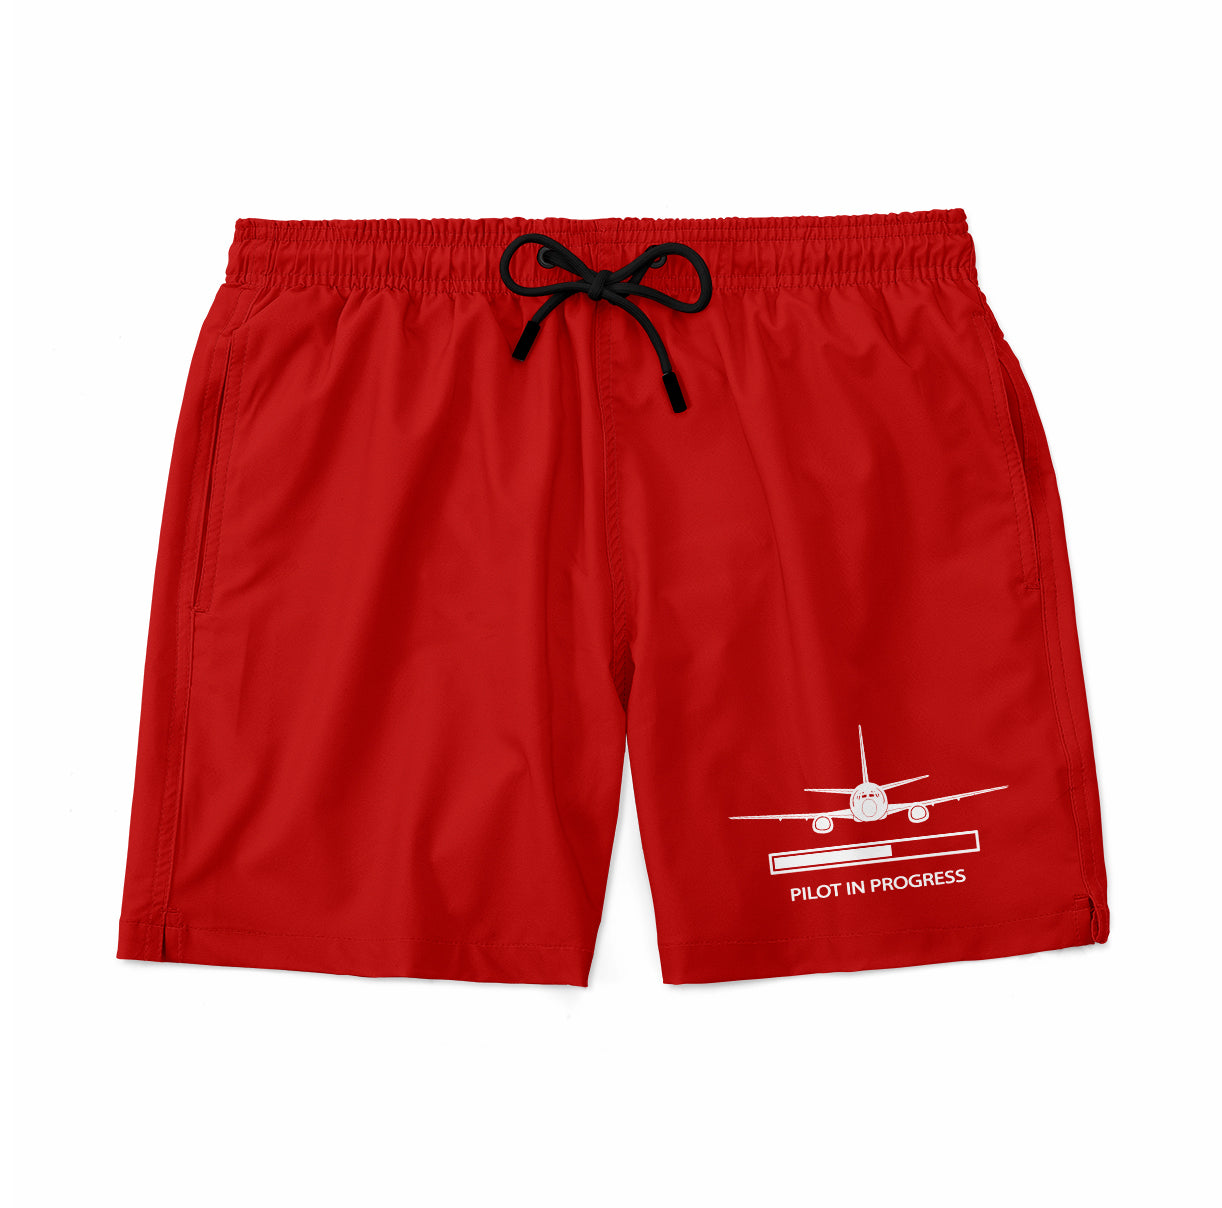 Pilot In Progress Designed Swim Trunks & Shorts